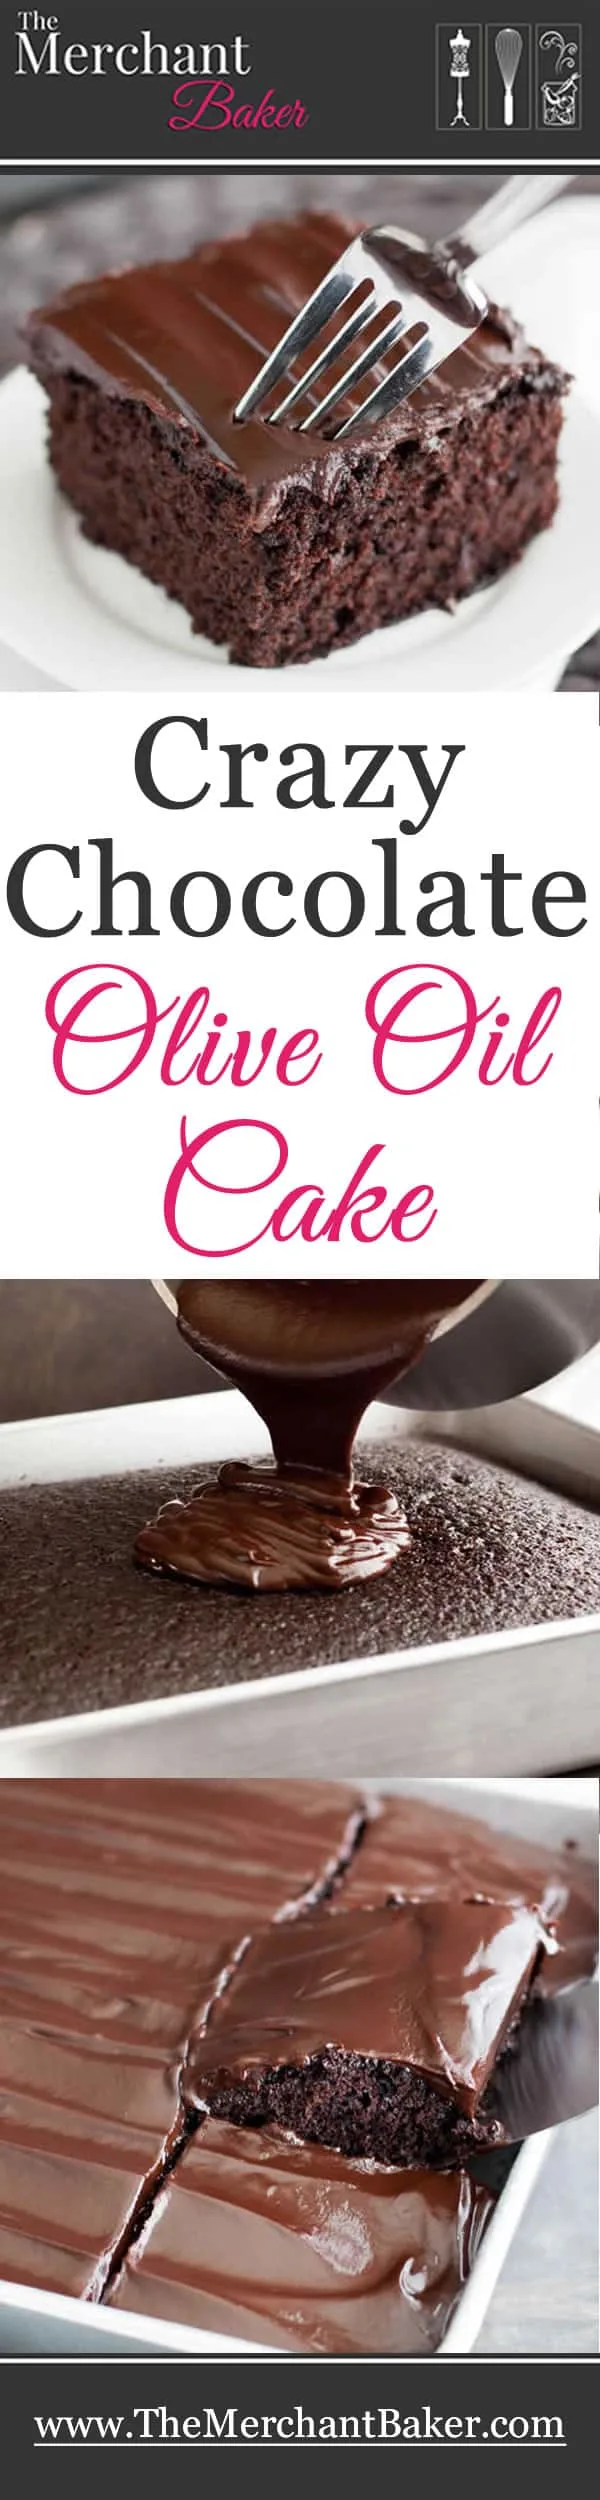 Crazy Chocolate Olive Oil Cake